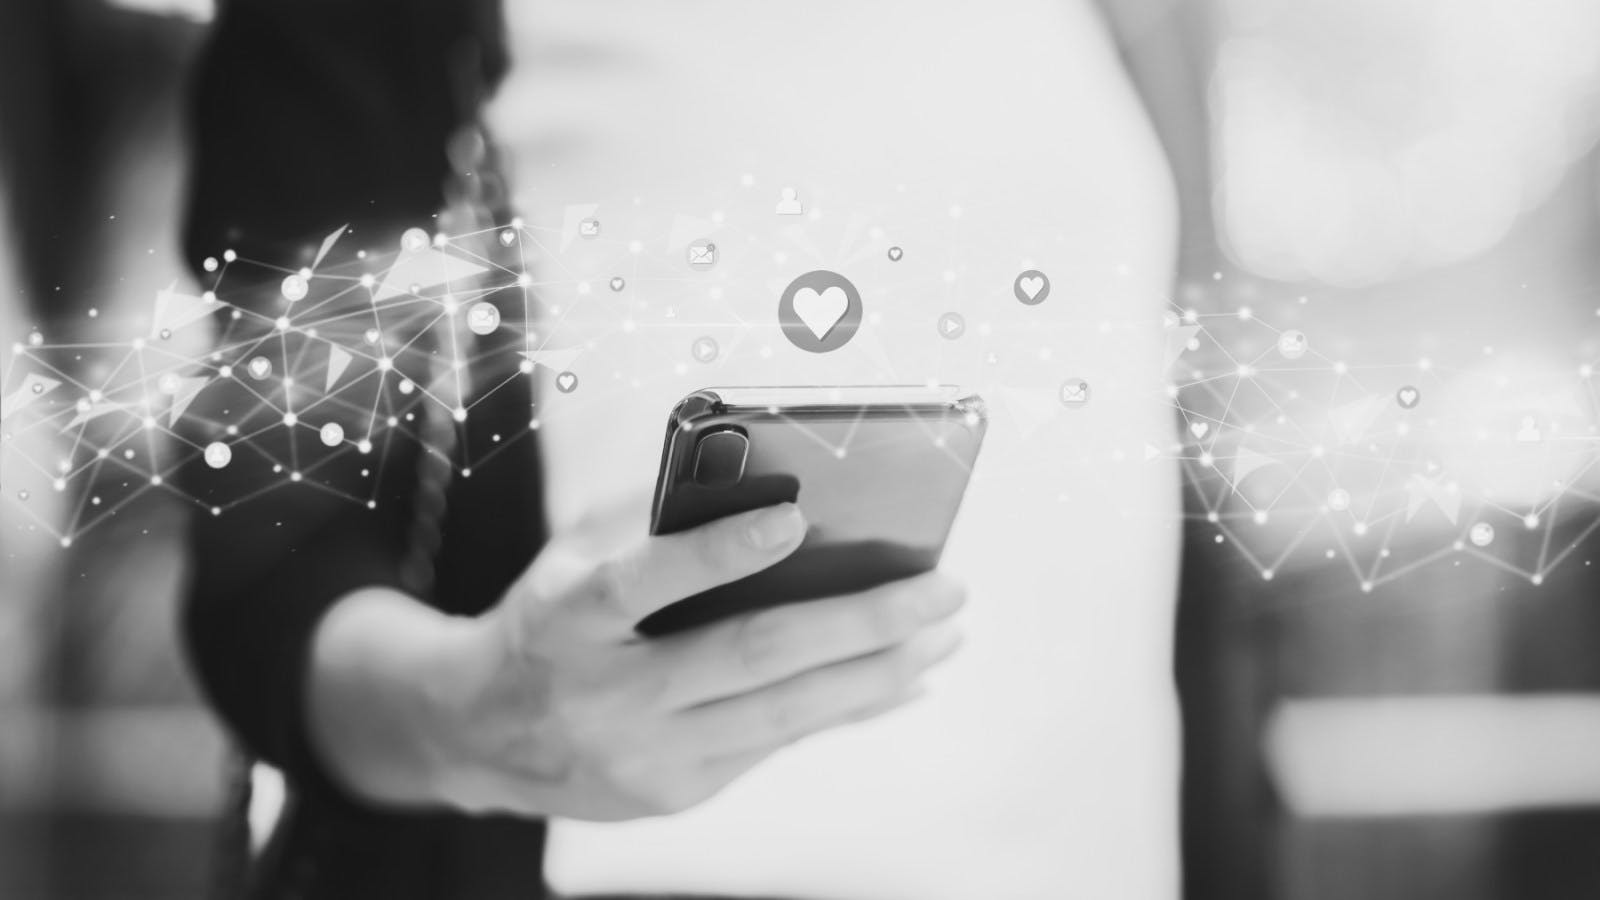 How the Engagement Model Made Social Media Antisocial